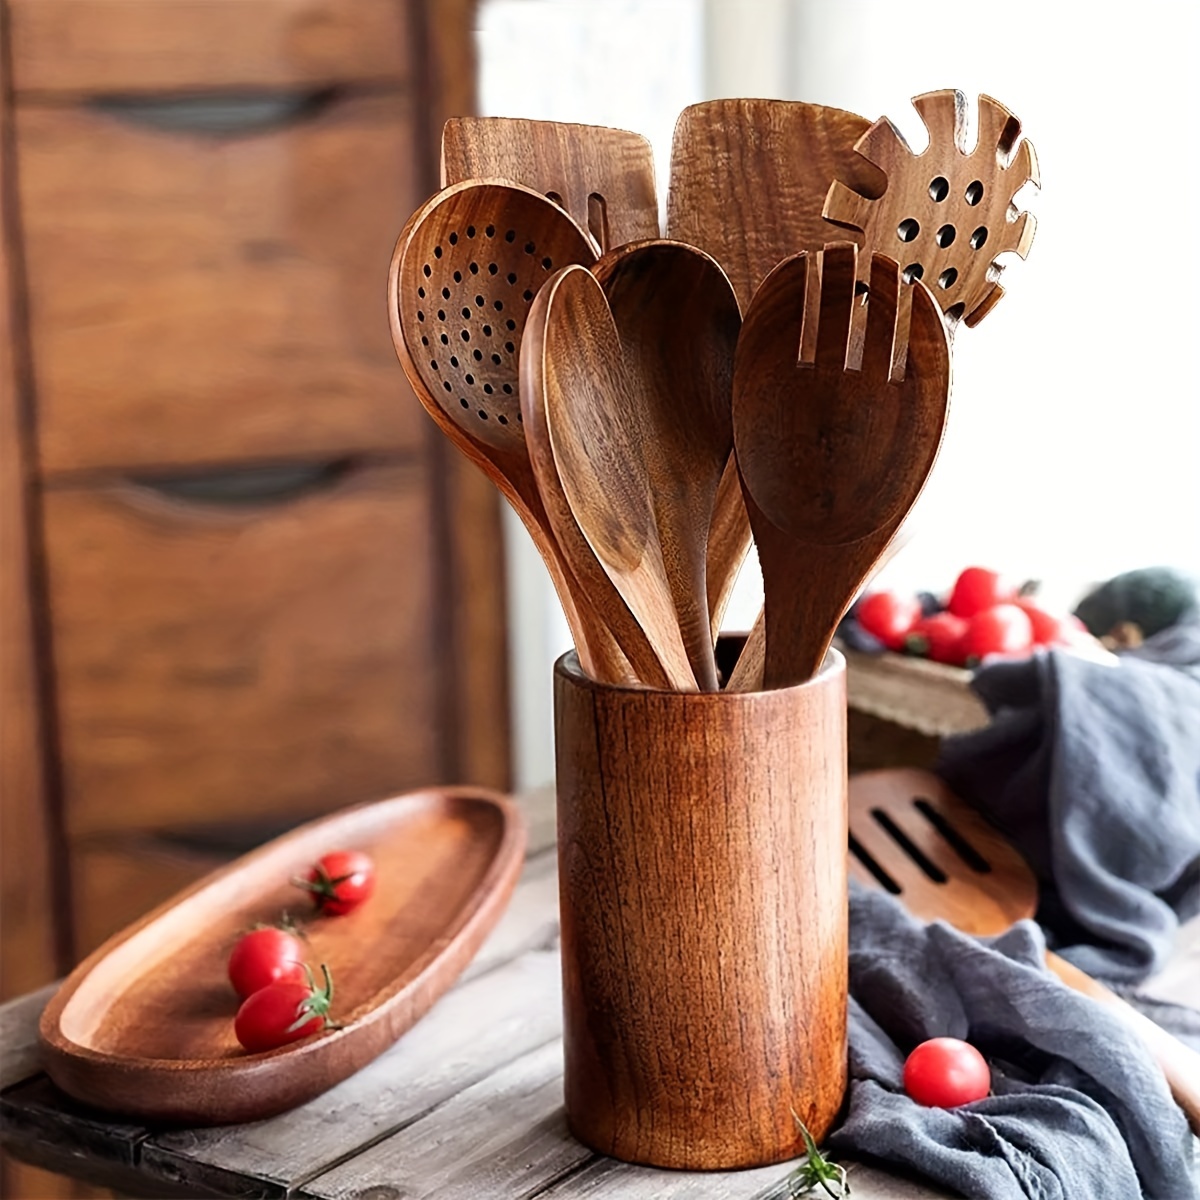 AIUHI Wooden Kitchen Utensil Set, Wooden Spoons for Cooking, Teak